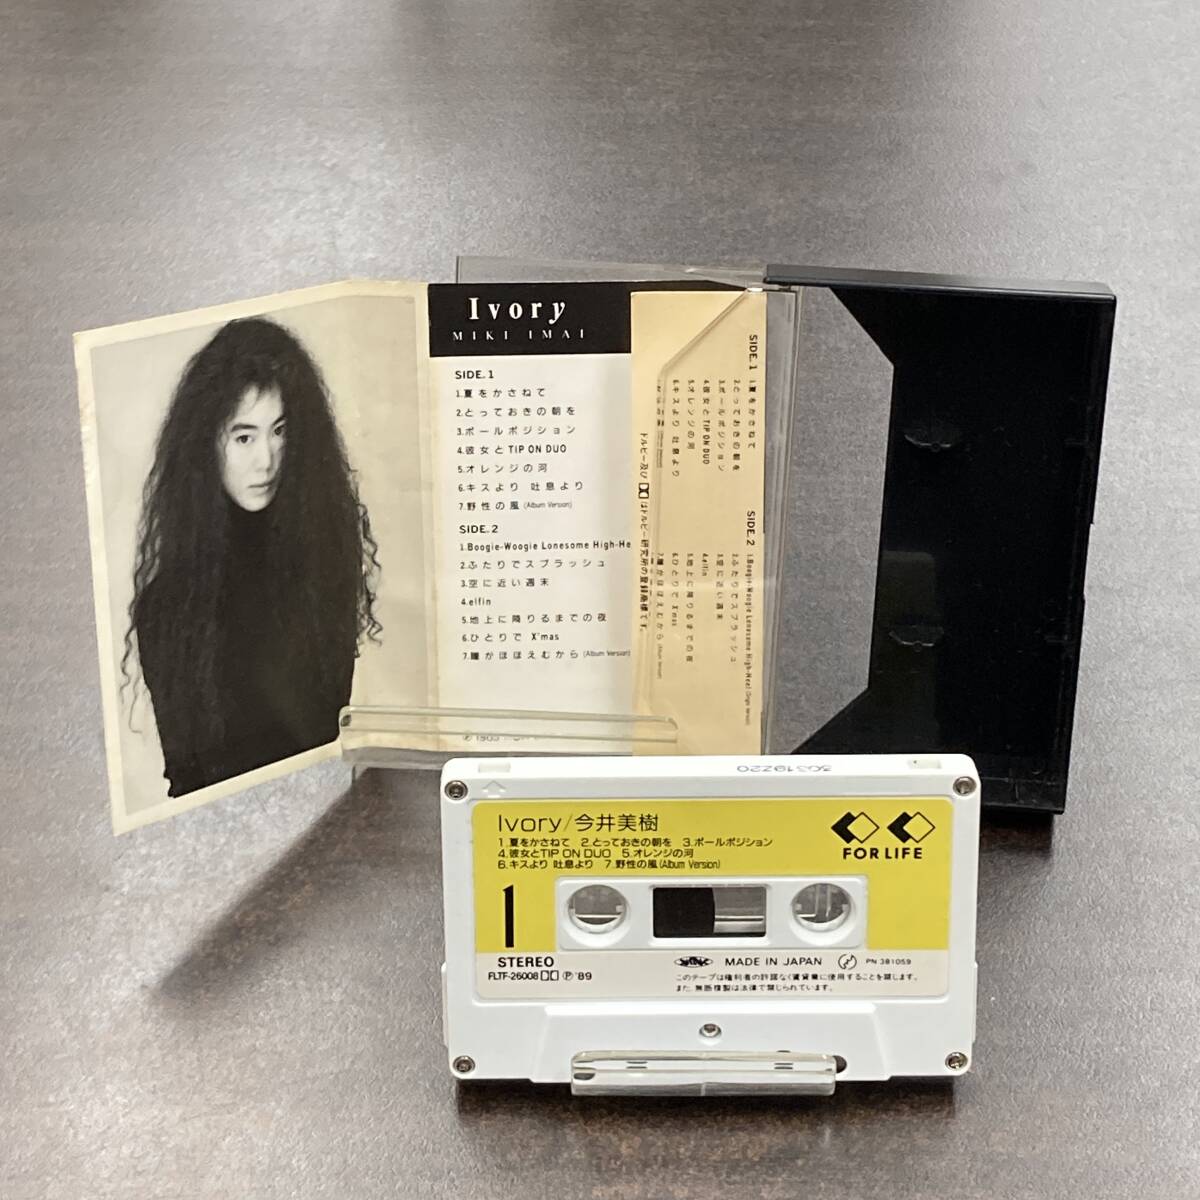 1133M 今井美樹 アイボリー Ivory カセットテープ / Miki Imai Idol Cassette Tapeの画像2